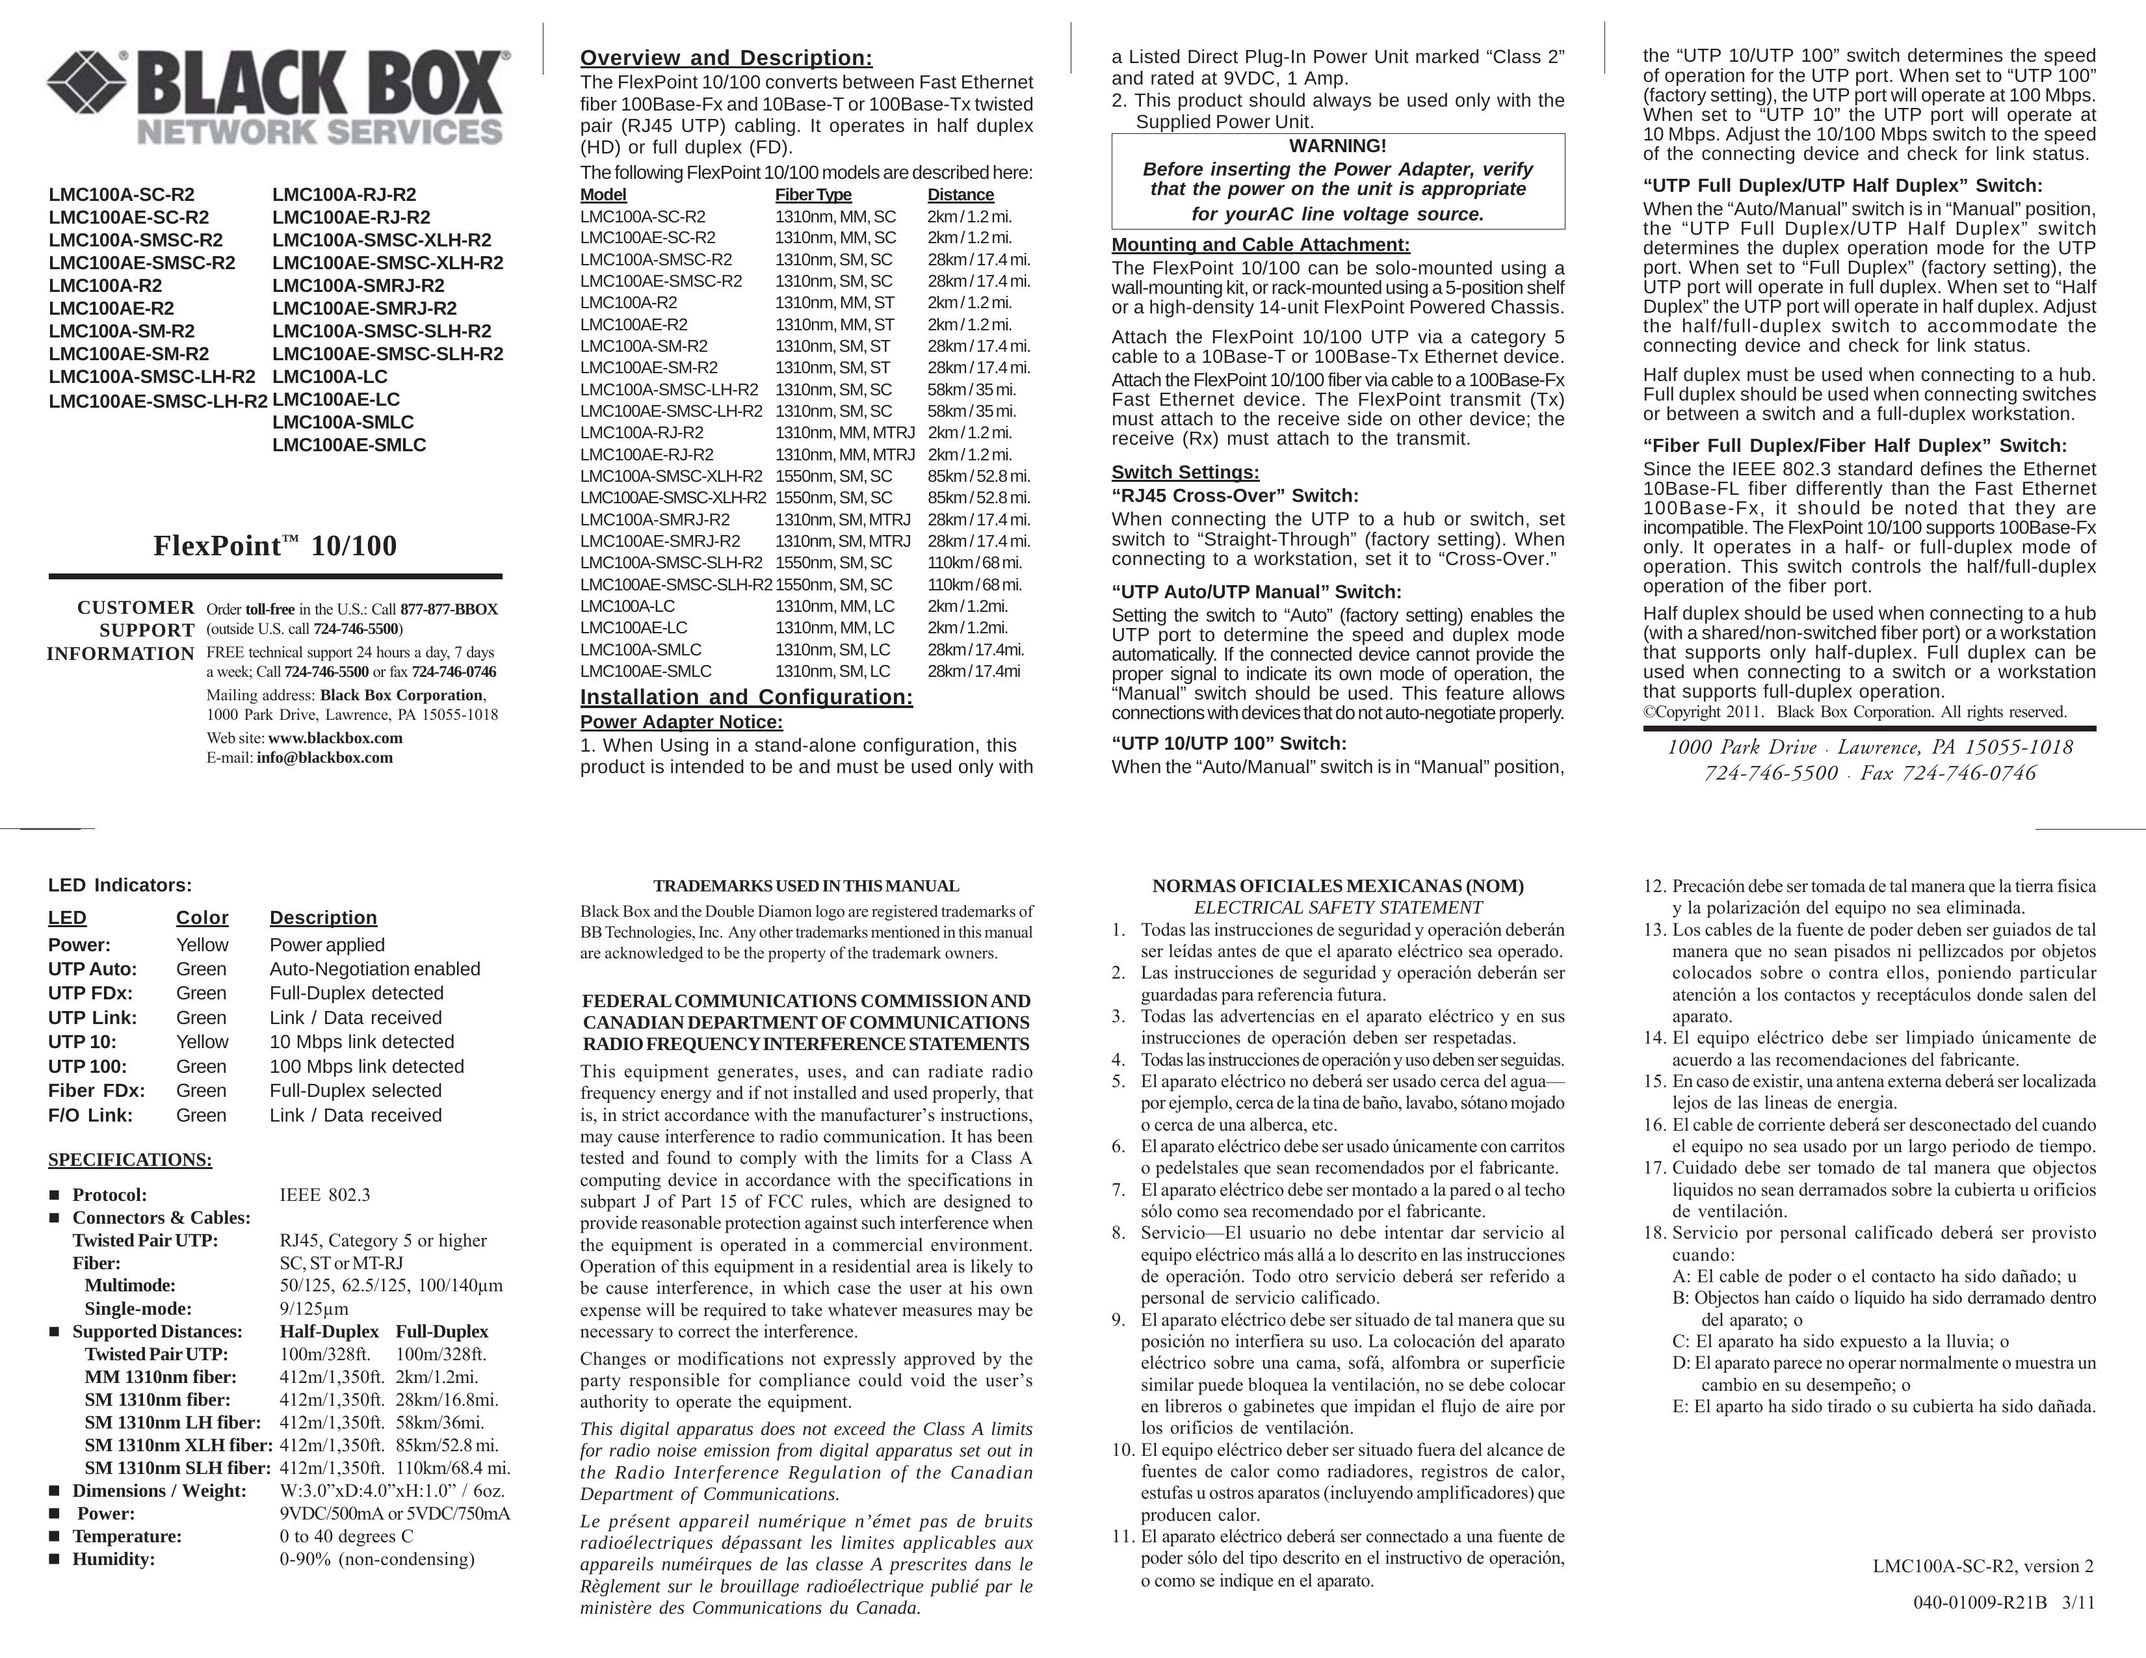 Black Box LMC100AE-SM-R2 Network Cables User Manual